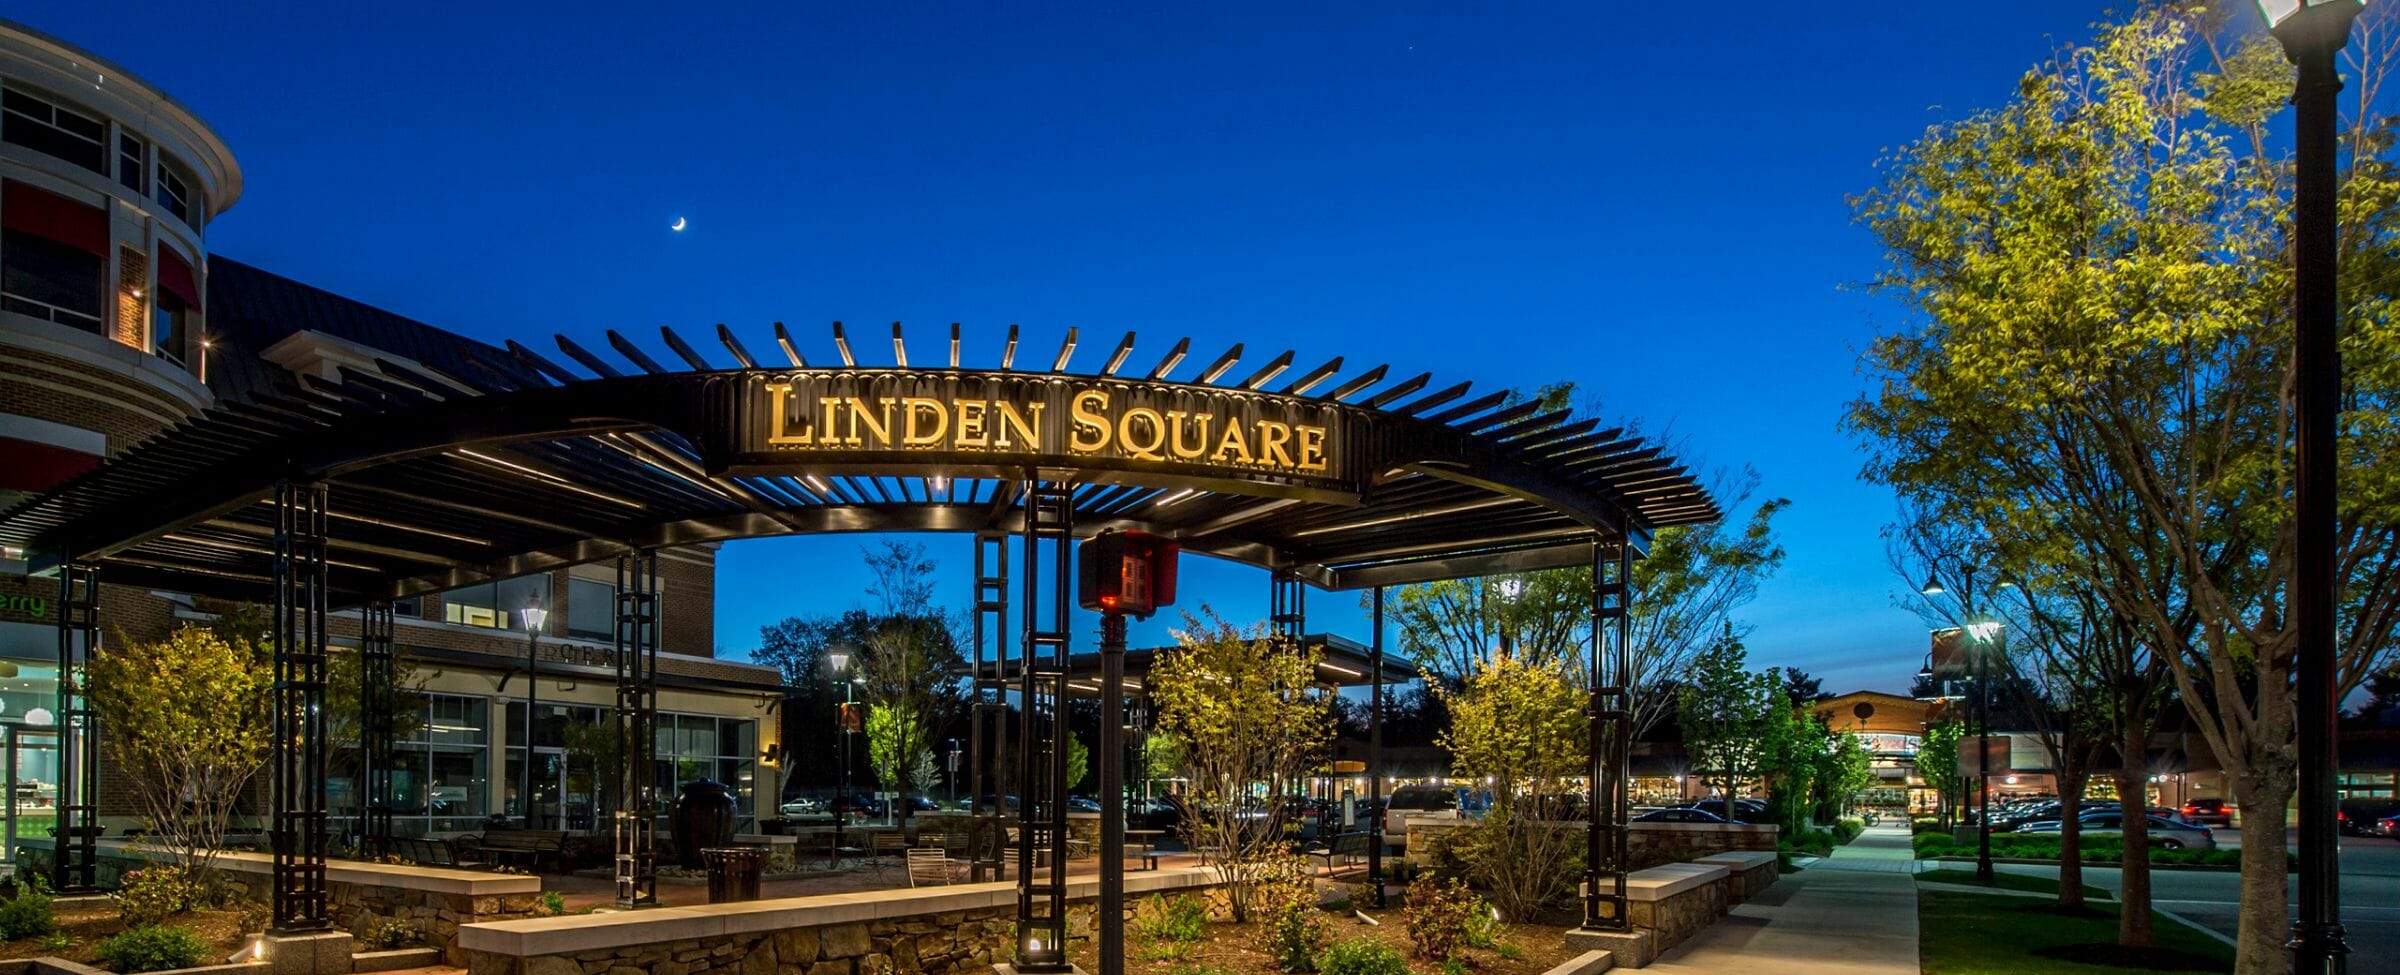 Linden Square at Night